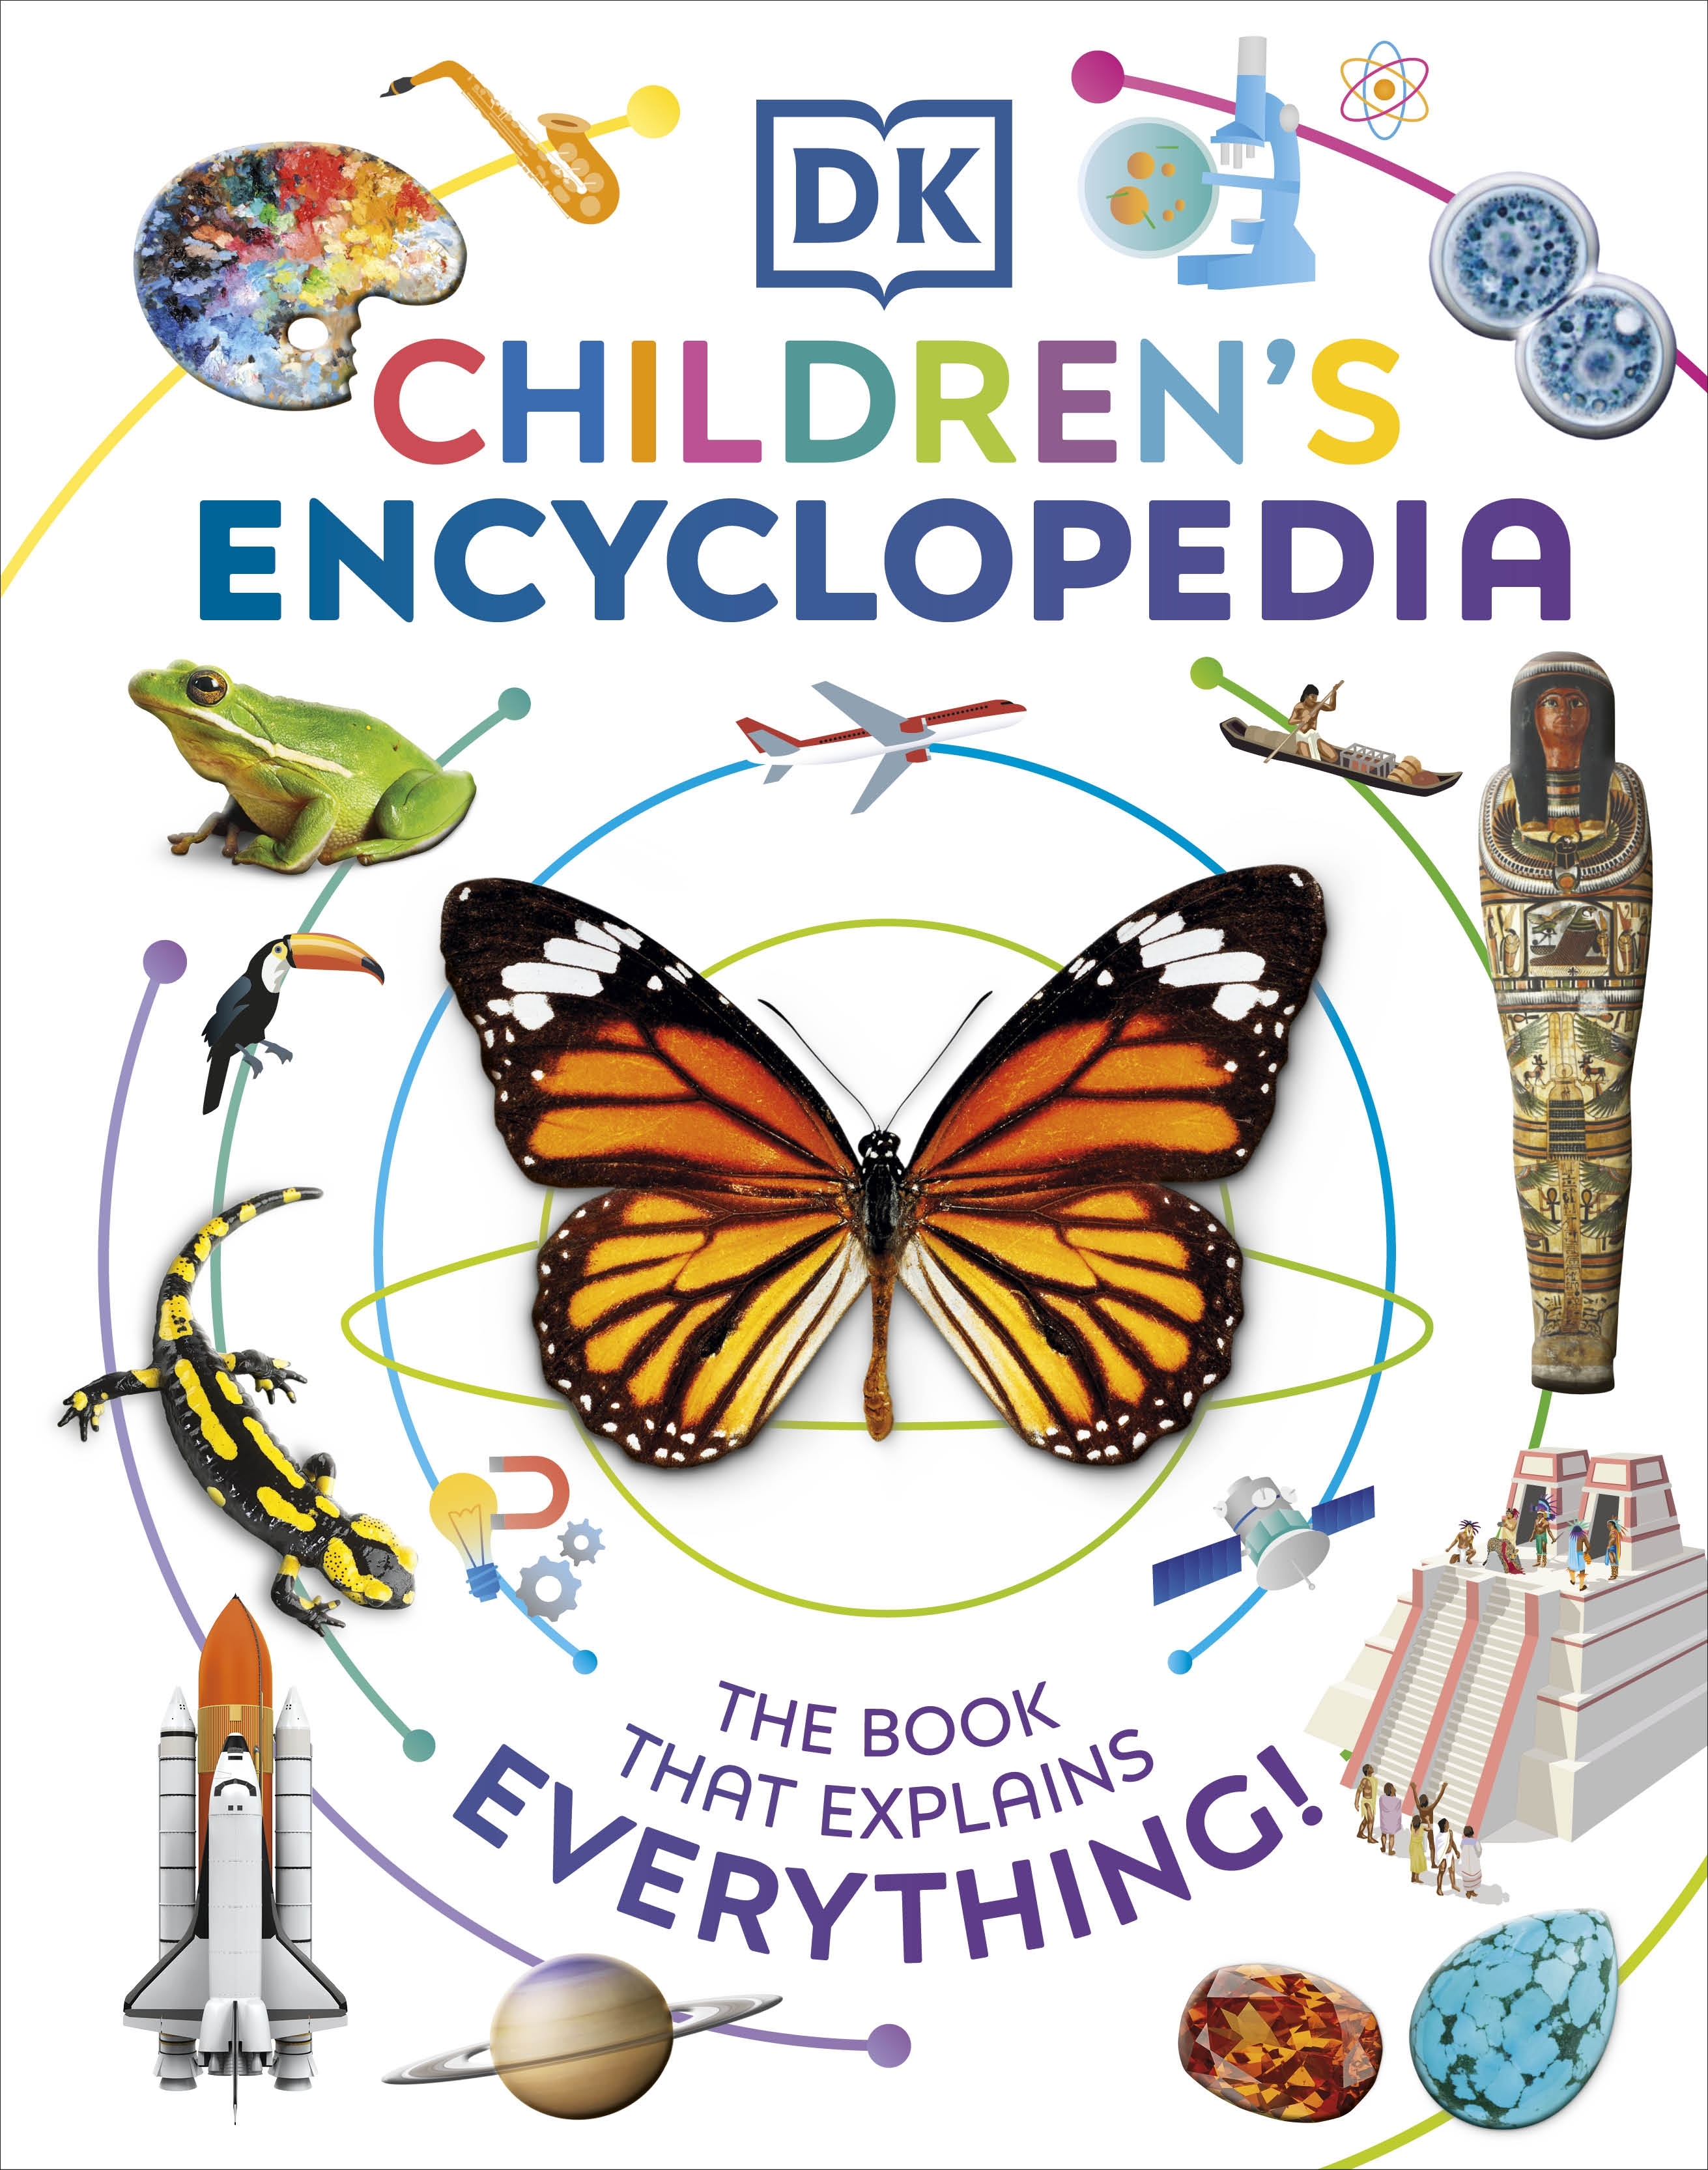 DK Children's Encyclopedia by DK - Penguin Books New Zealand